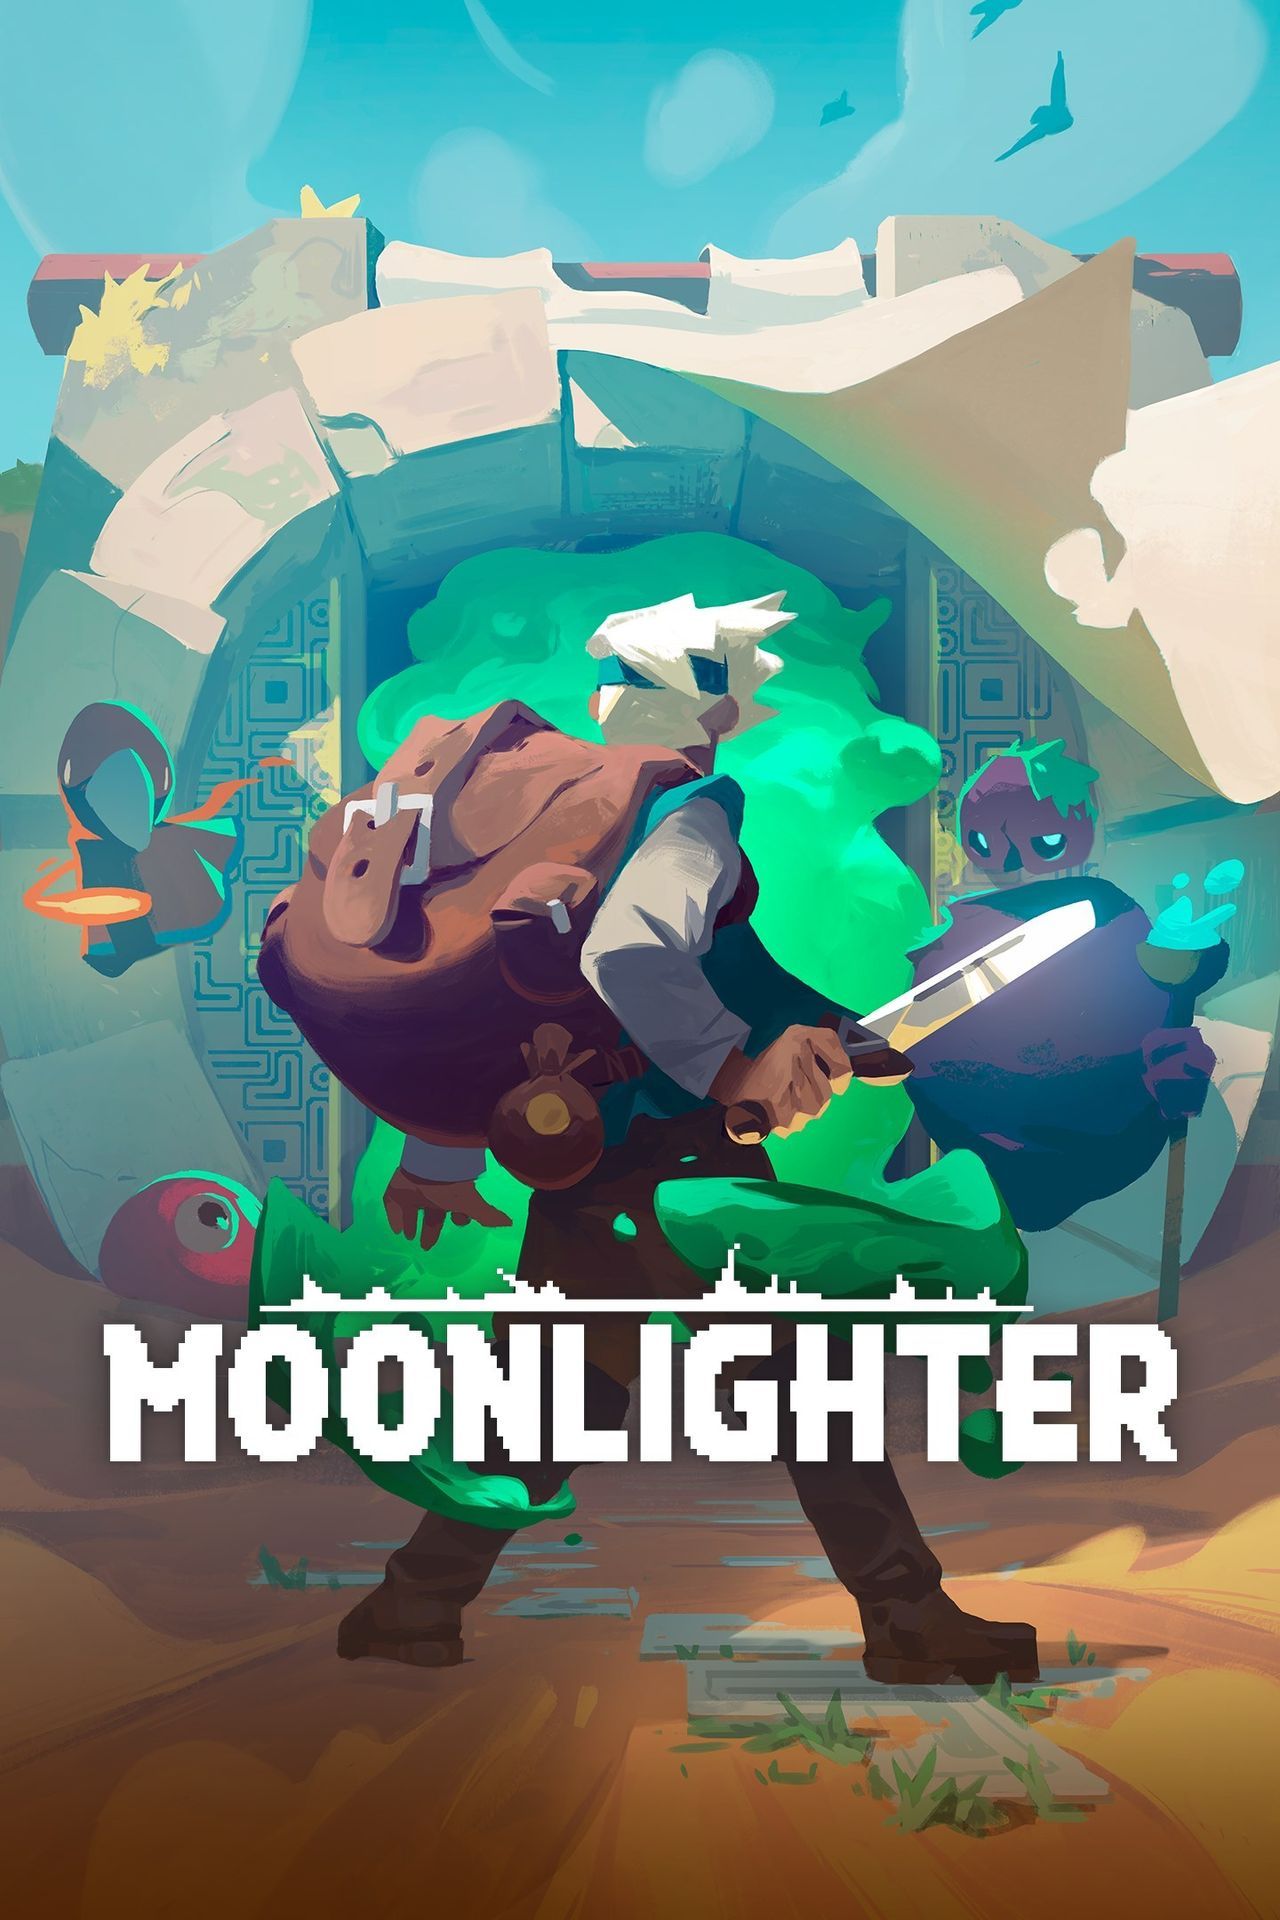 download free moonlighter xbox